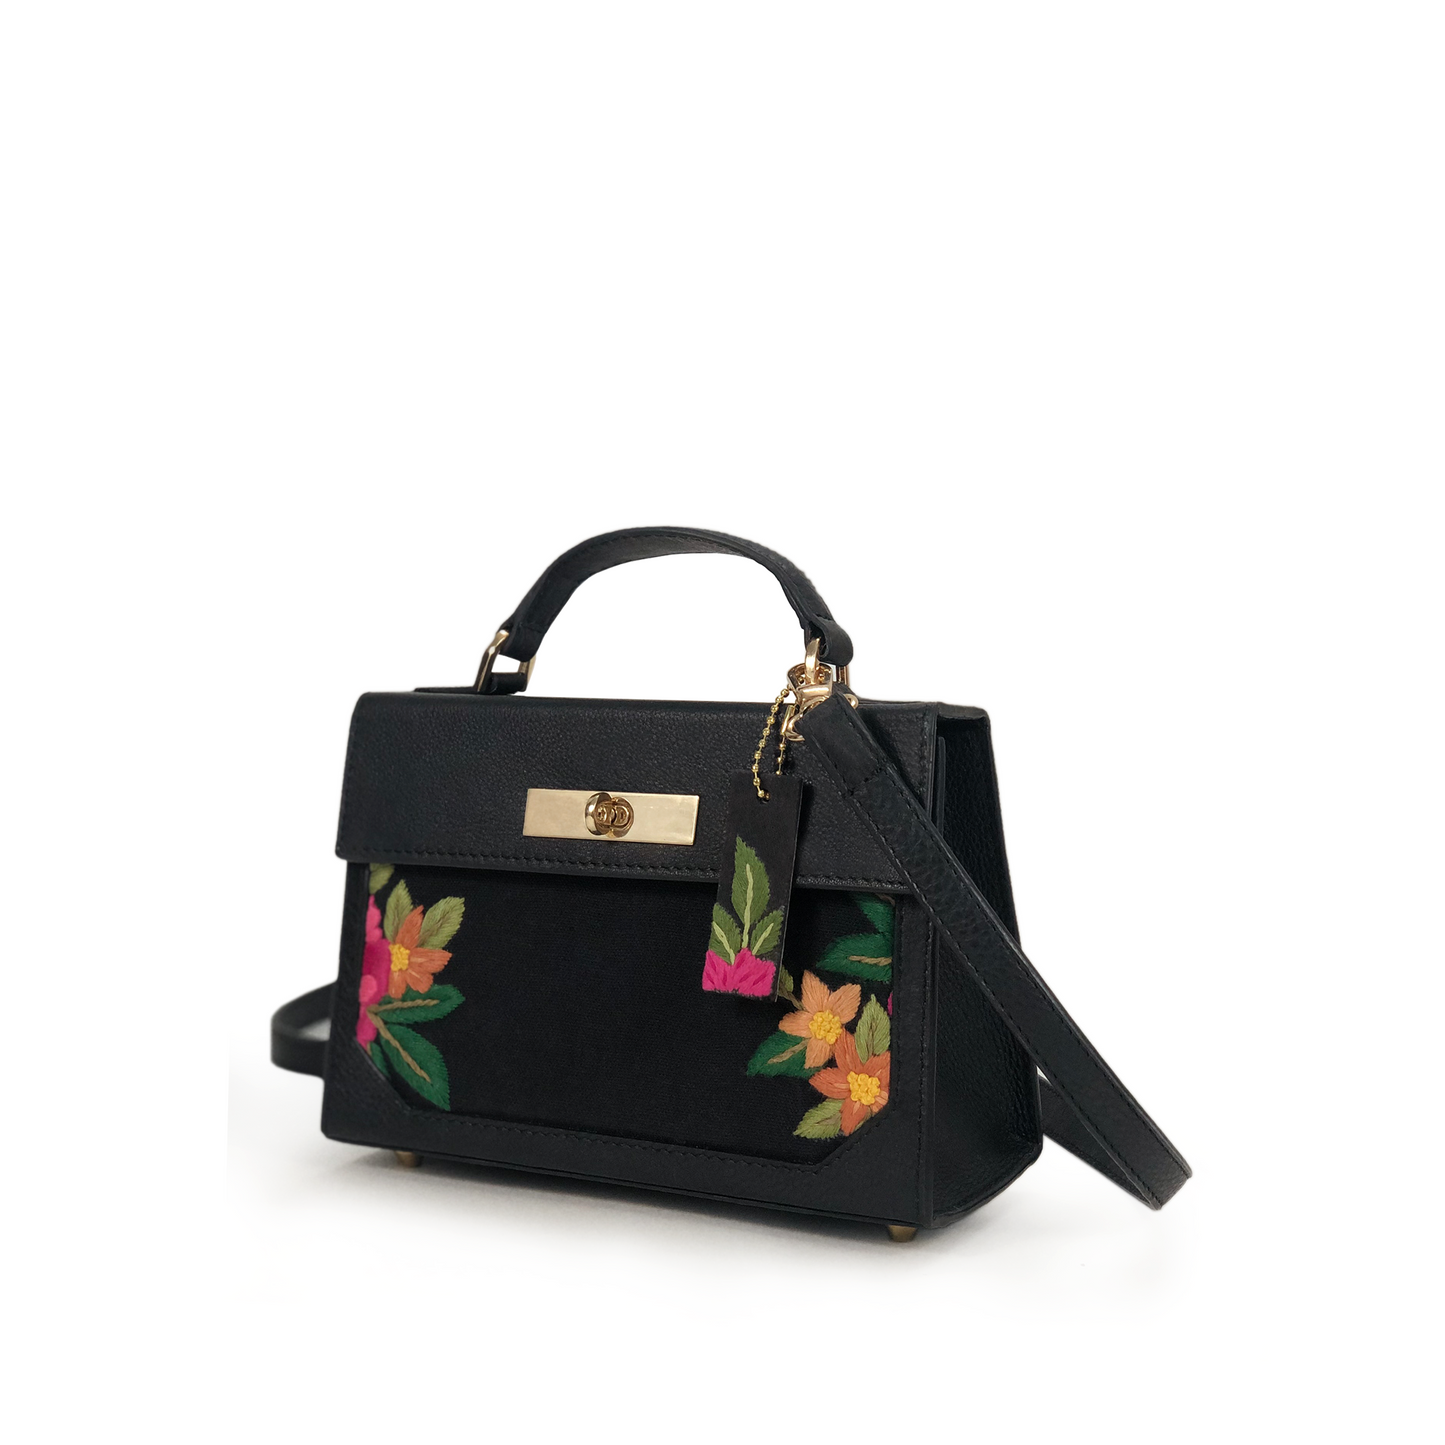 New Iris mini embroidered handbag